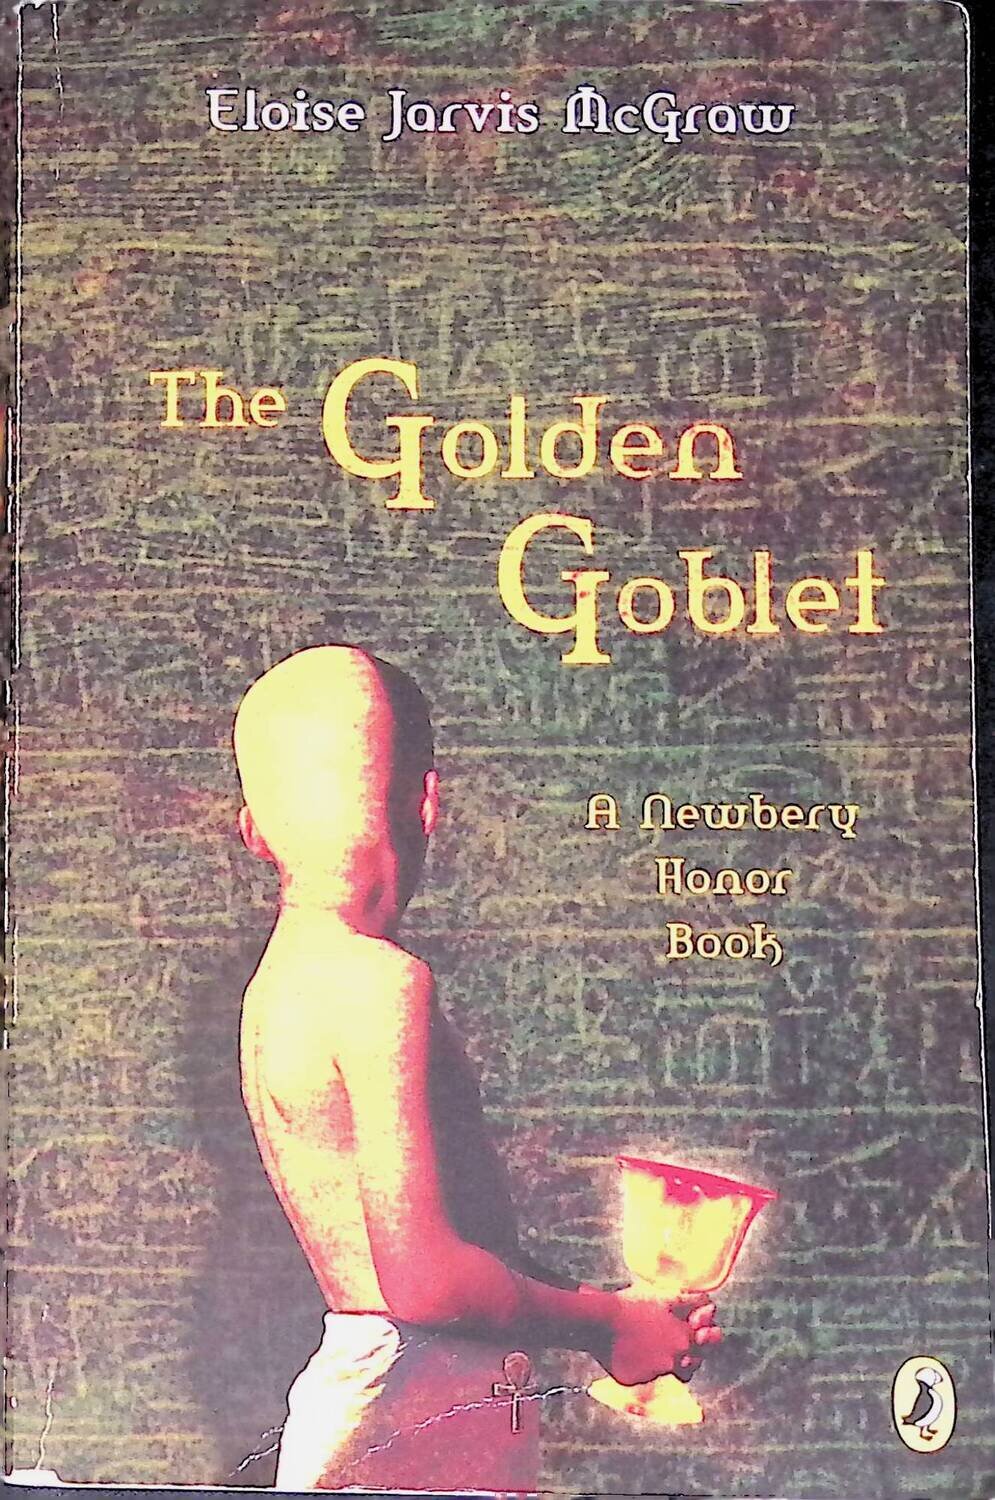 The Golden Goblet; McGraw Eloise Jarvis